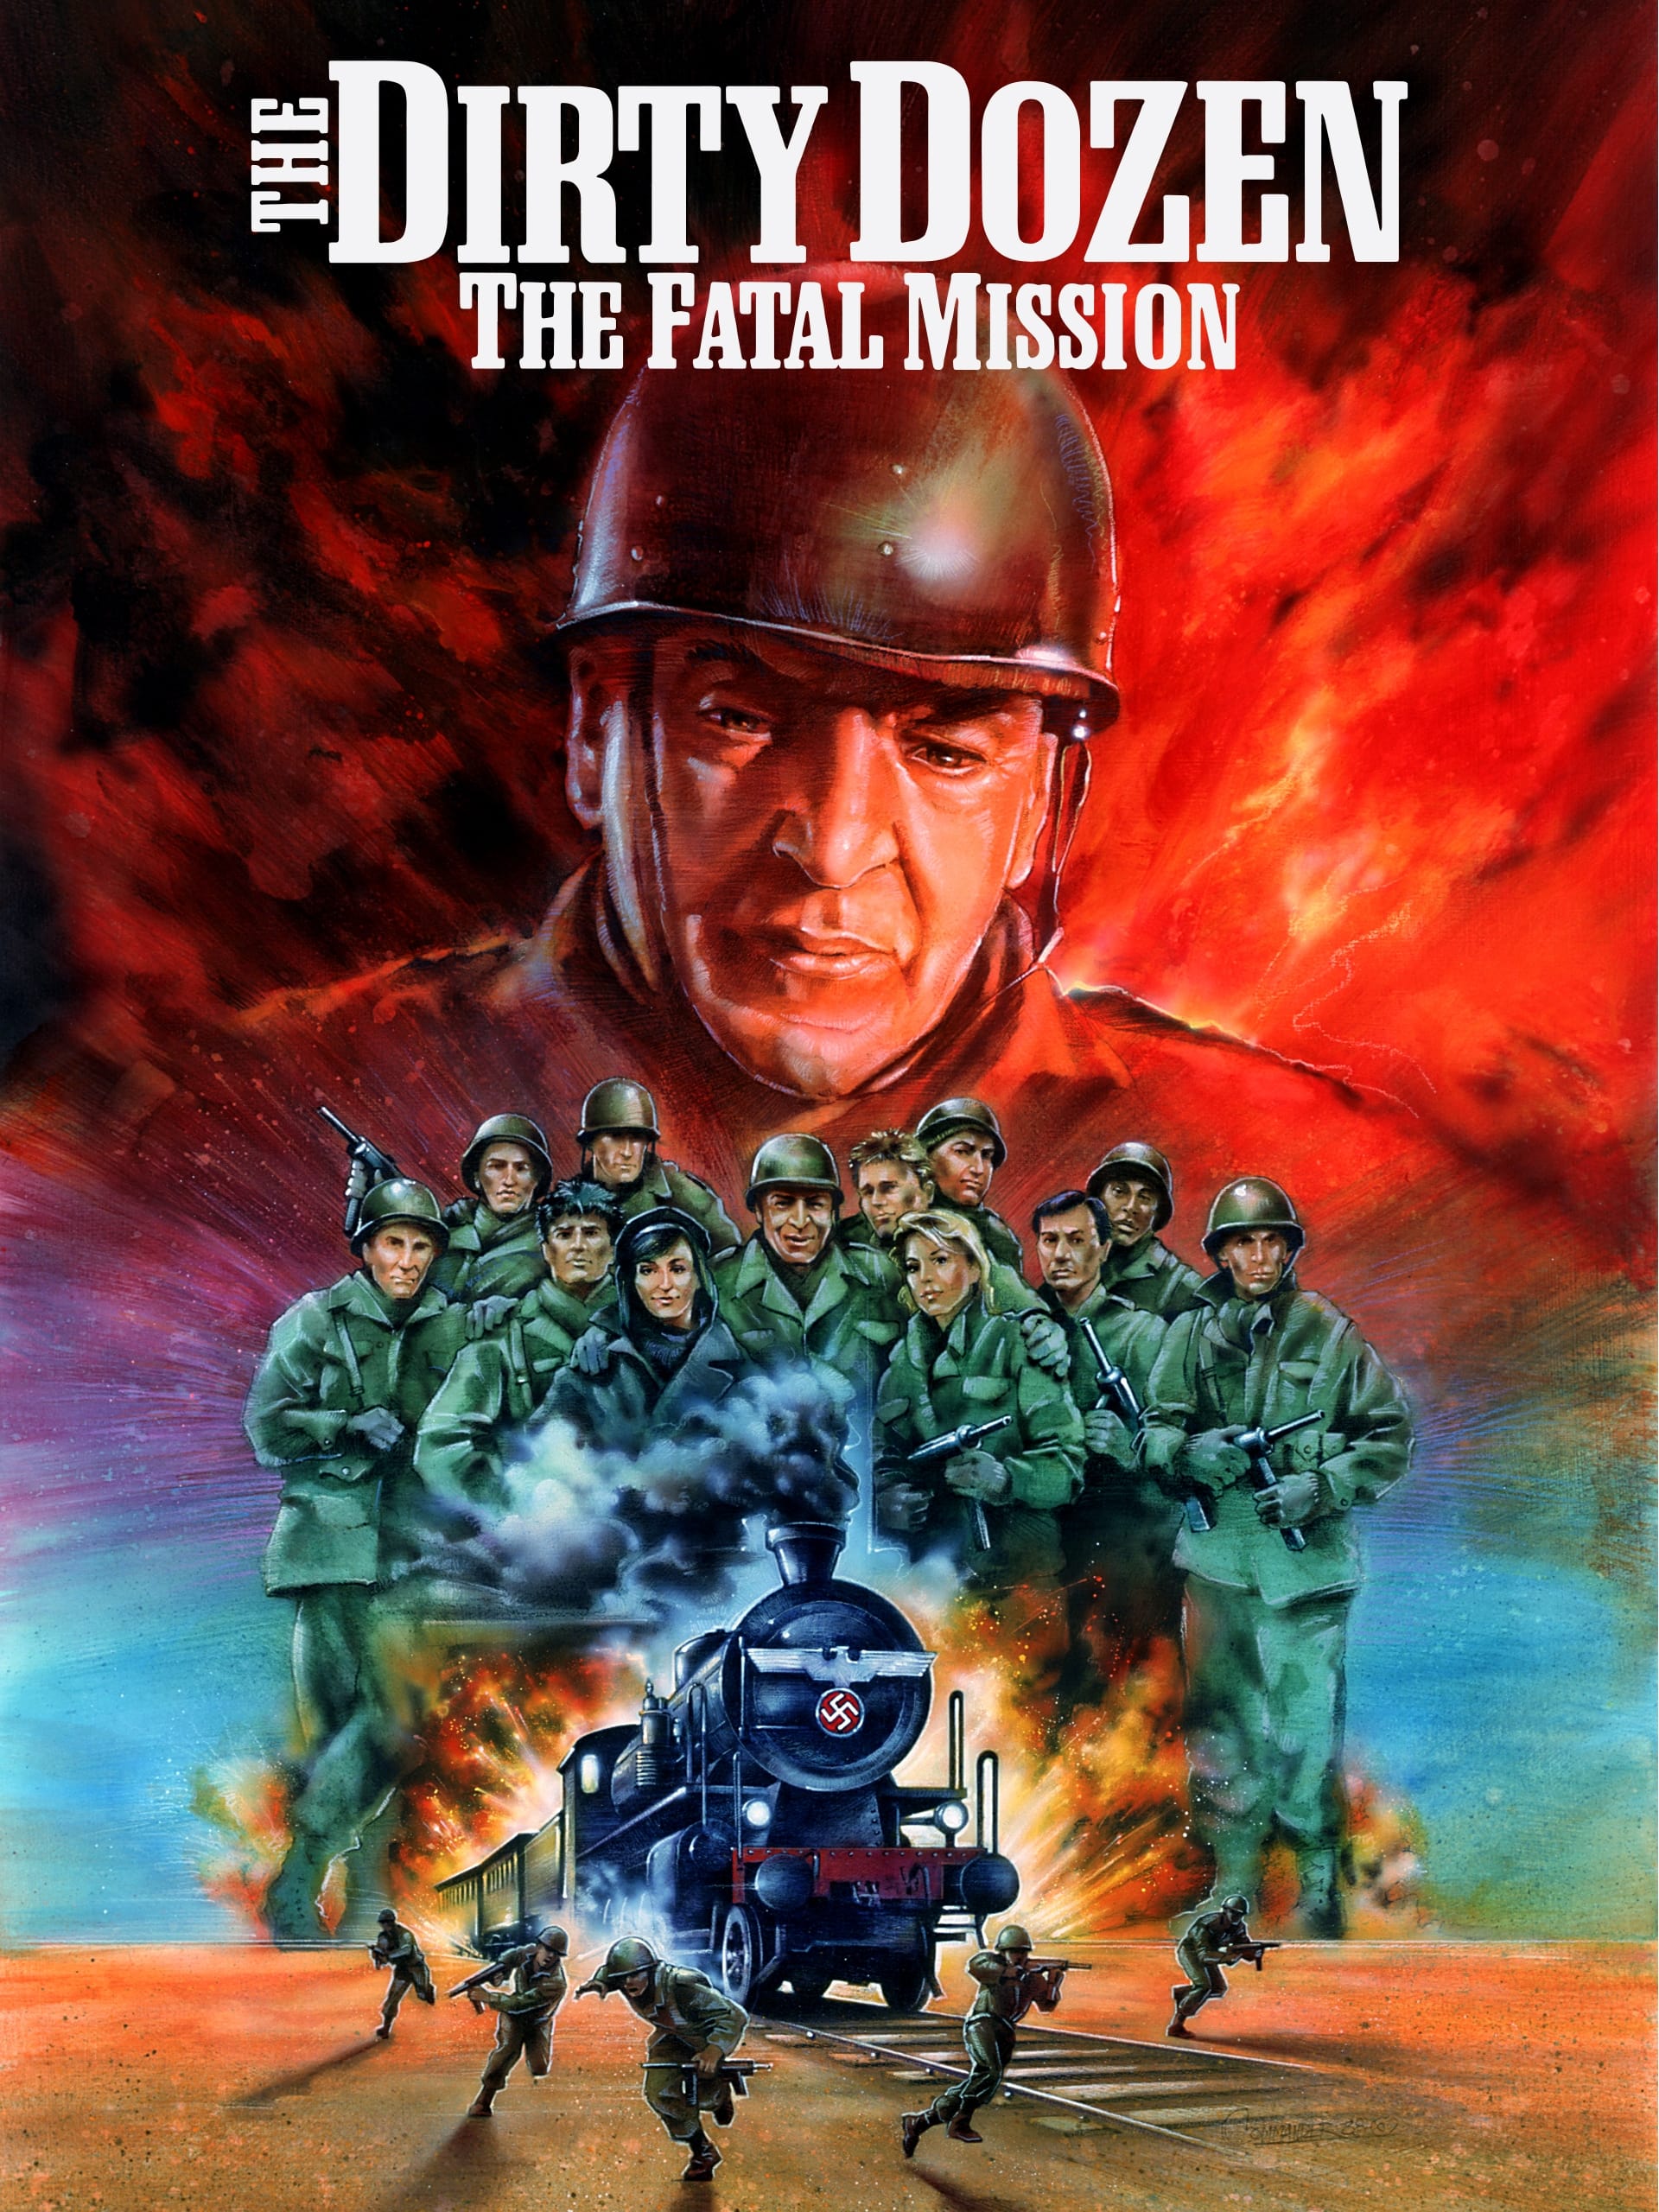 Das dreckige Dutzend IV - The Fatal Mission (1988)